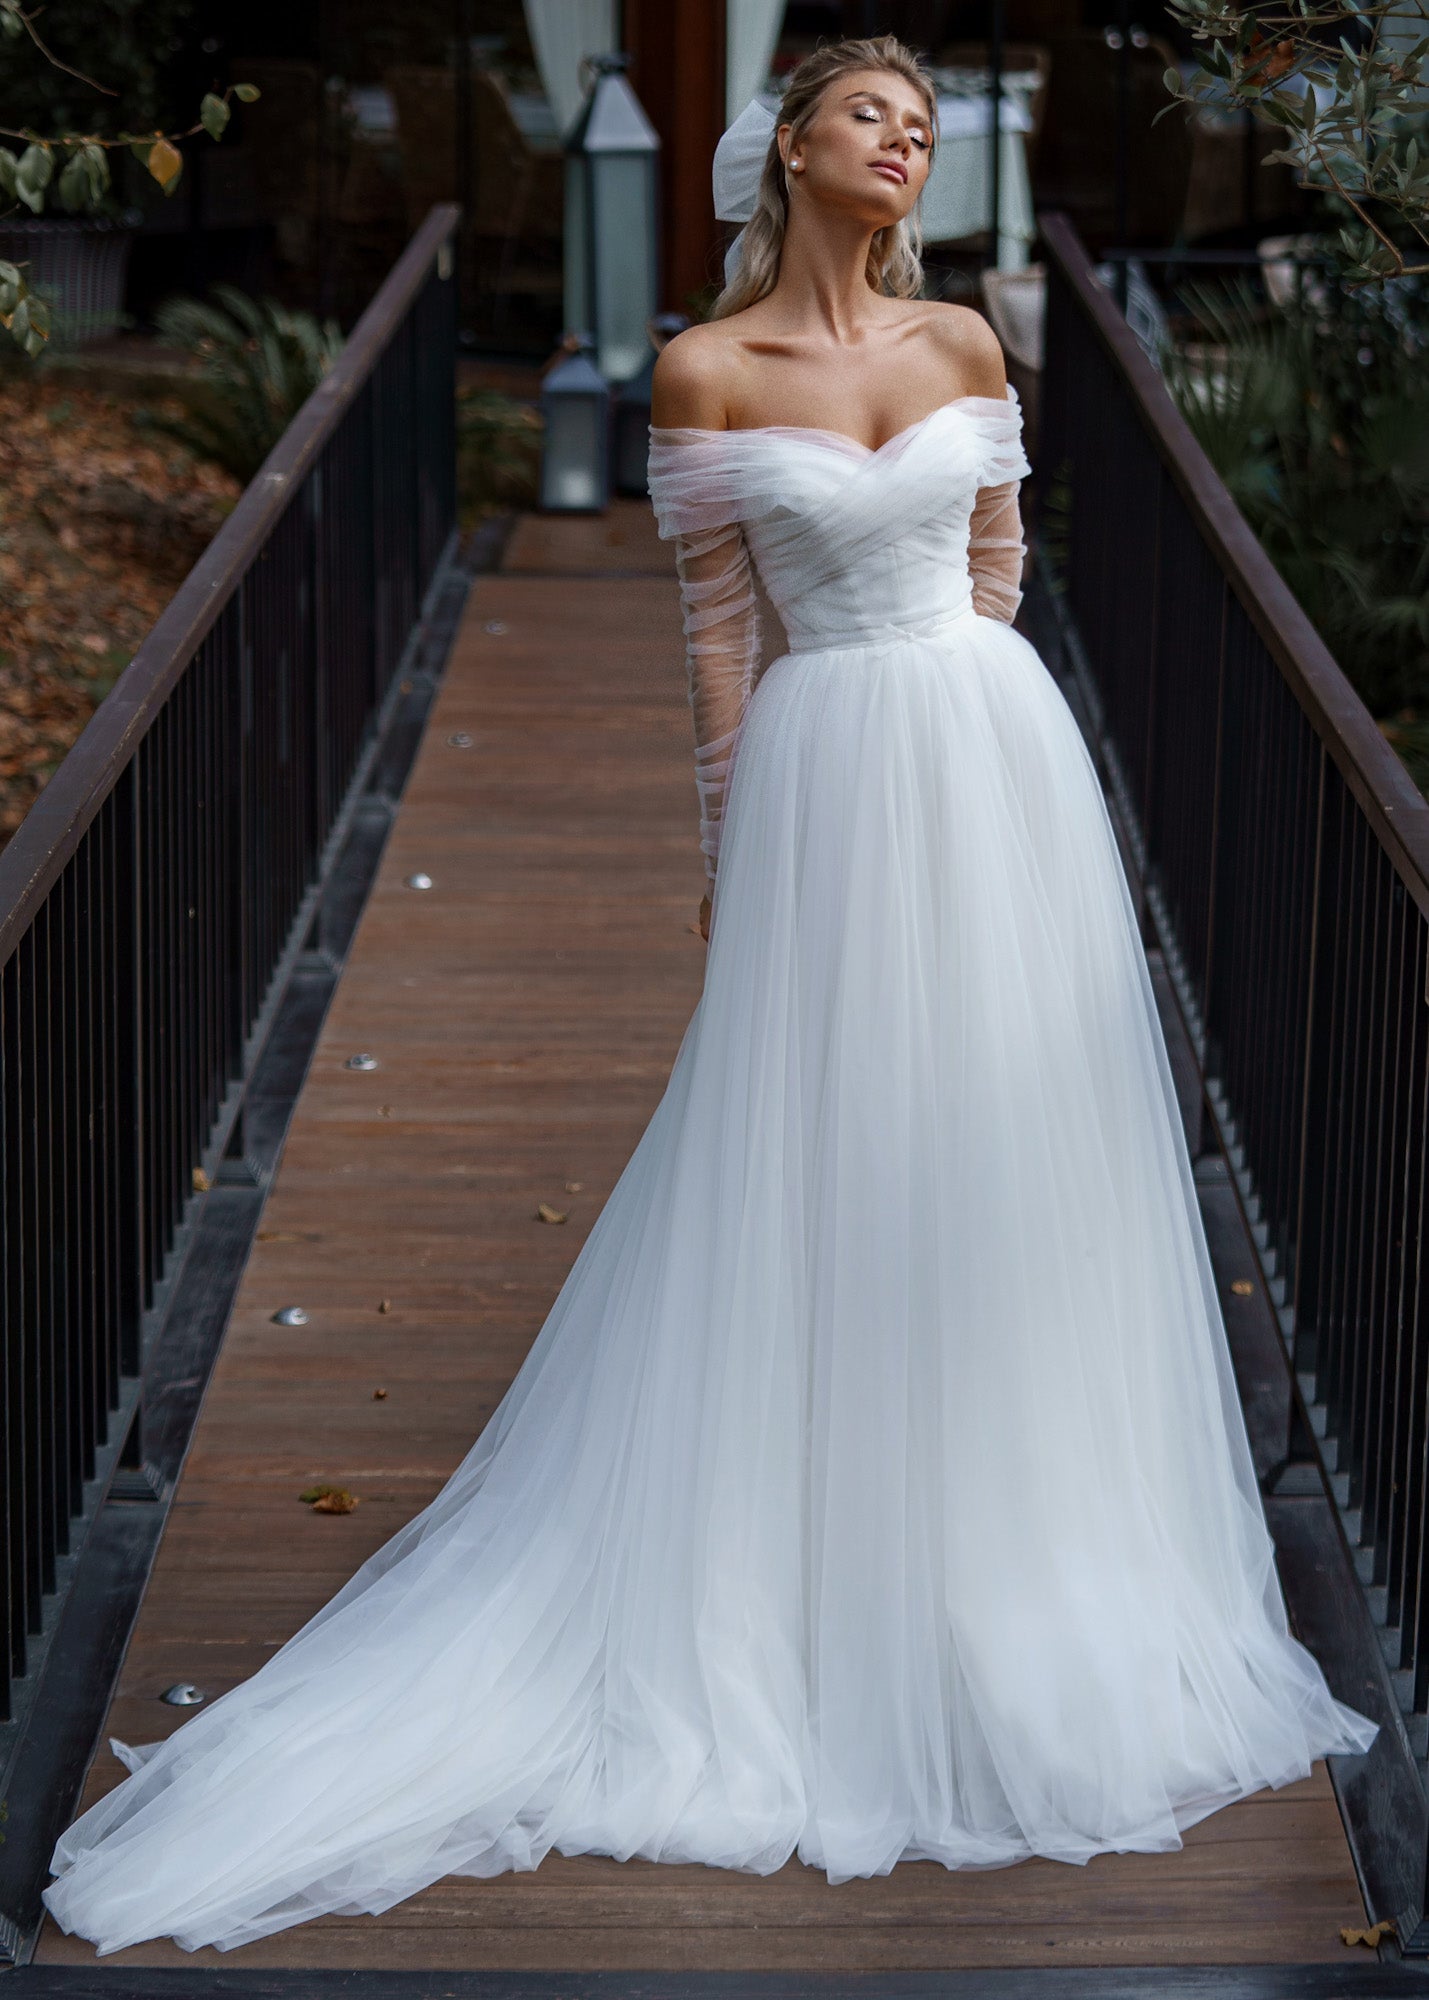 Simple Satin A-Line Wedding Dress with Deep V Neck, Backless Design